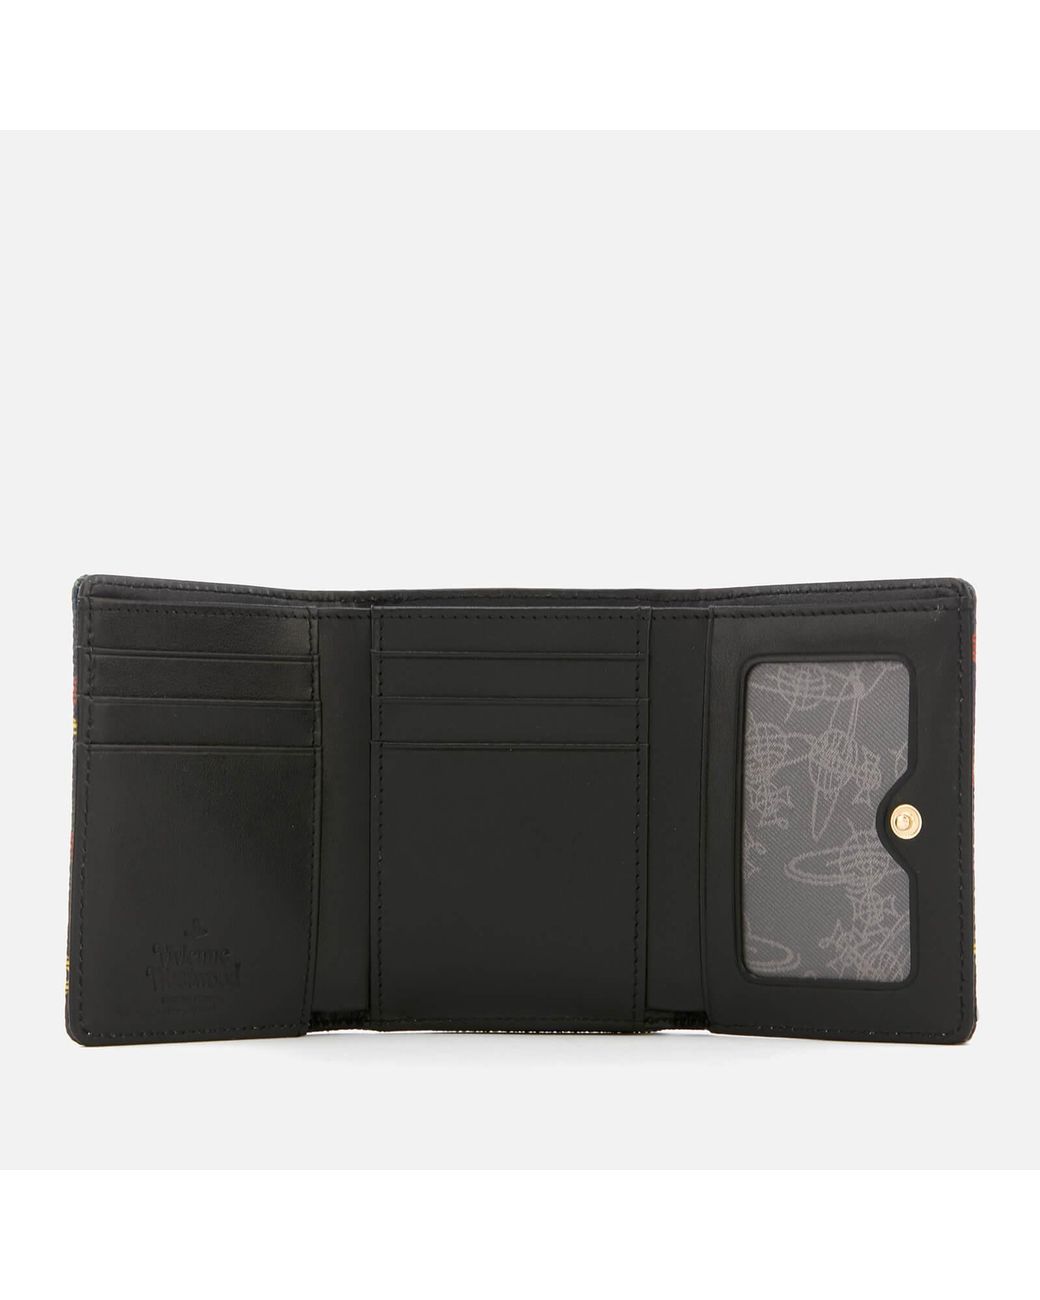 Vivienne Westwood Derby Small Frame Wallet | Lyst Australia